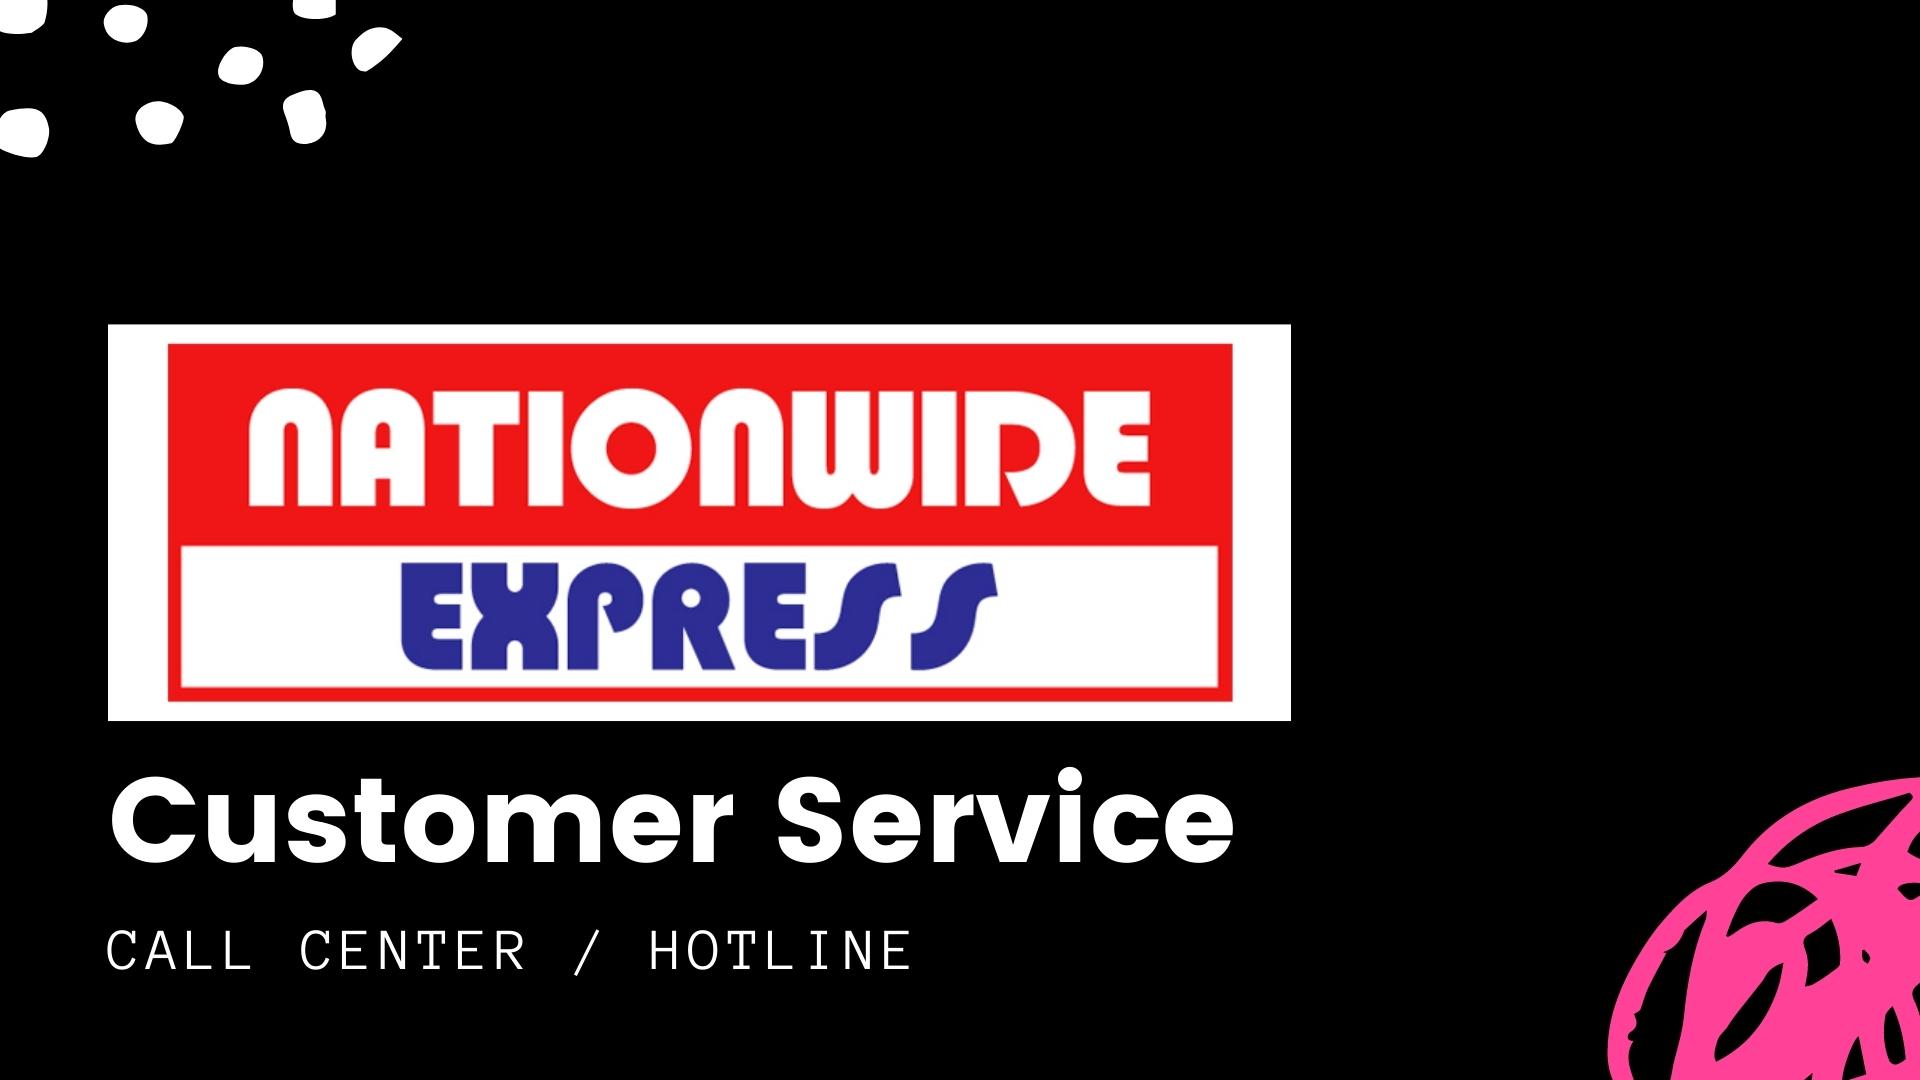 Nationwide Customer Service